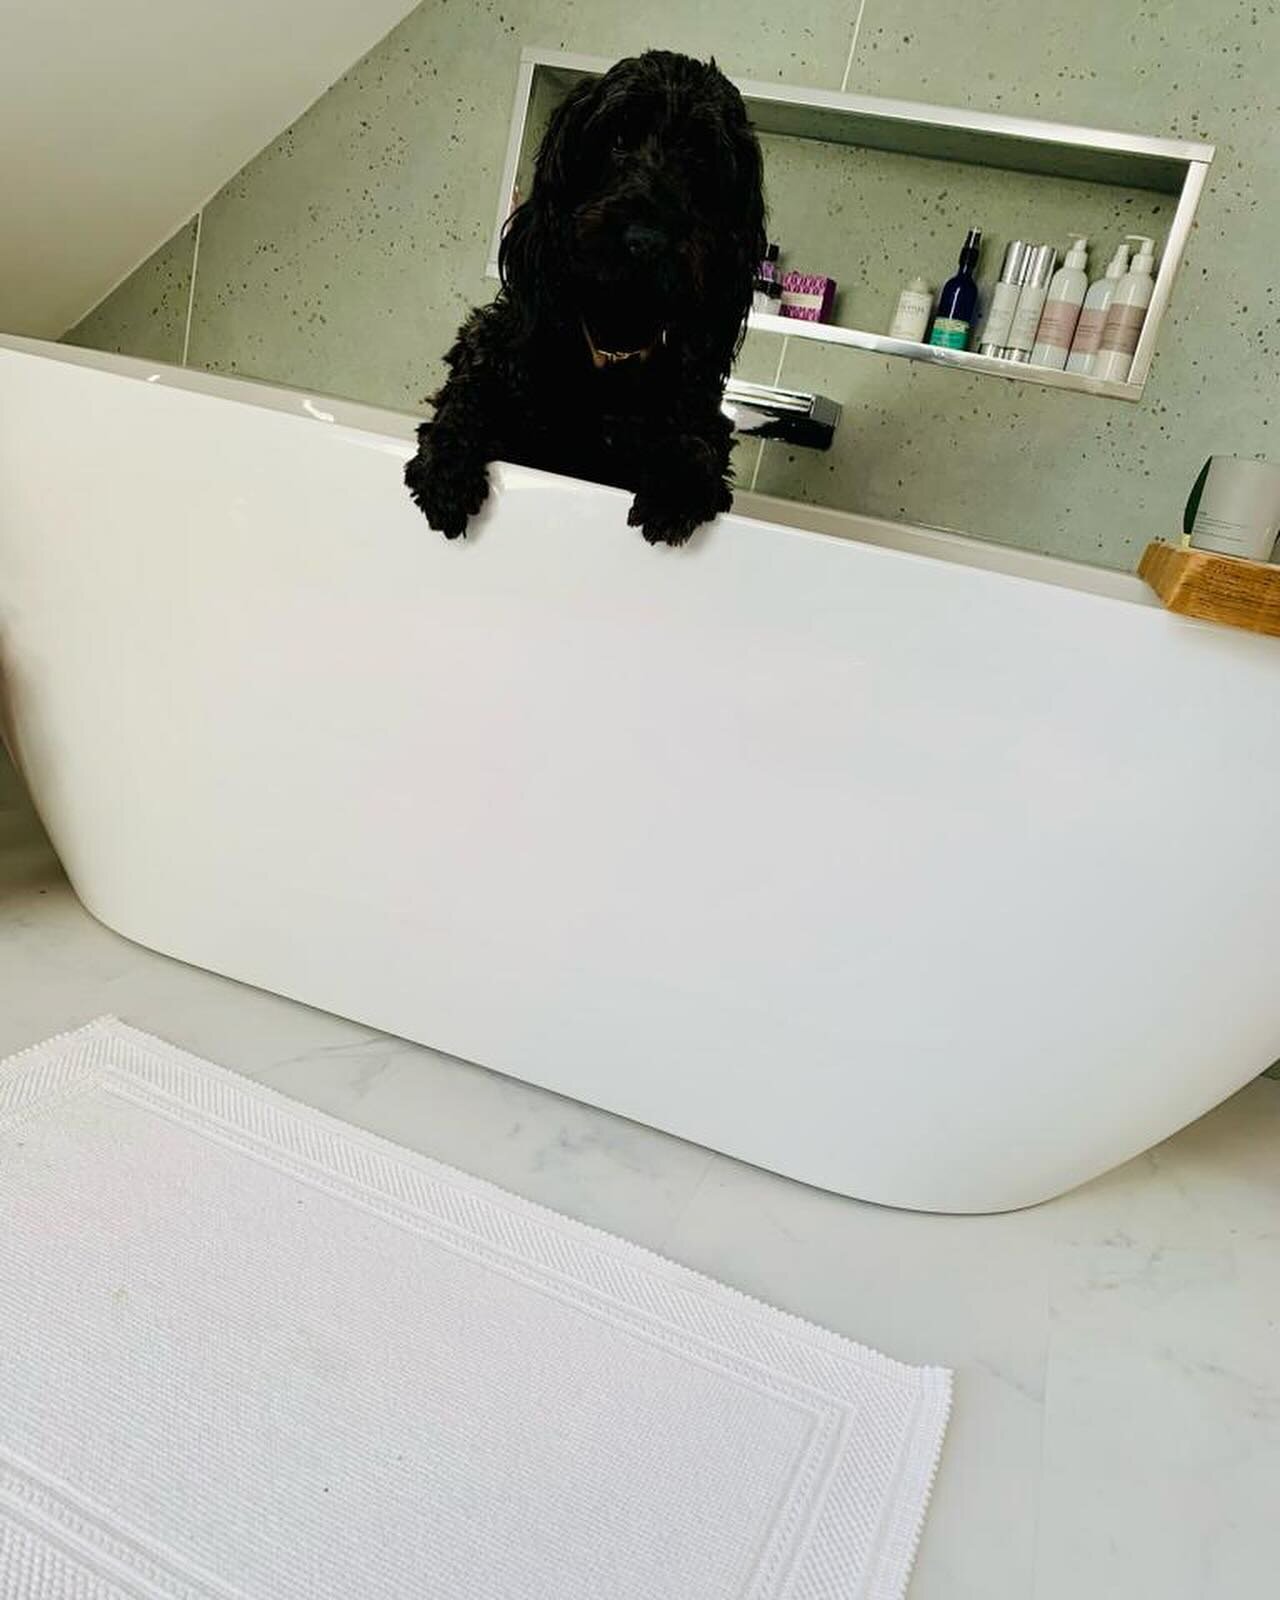 Bella &amp; Nala enjoying the @watersbaths back to wall freestanding bath!
#dogsinbaths #dogsofinstagram #bathroom